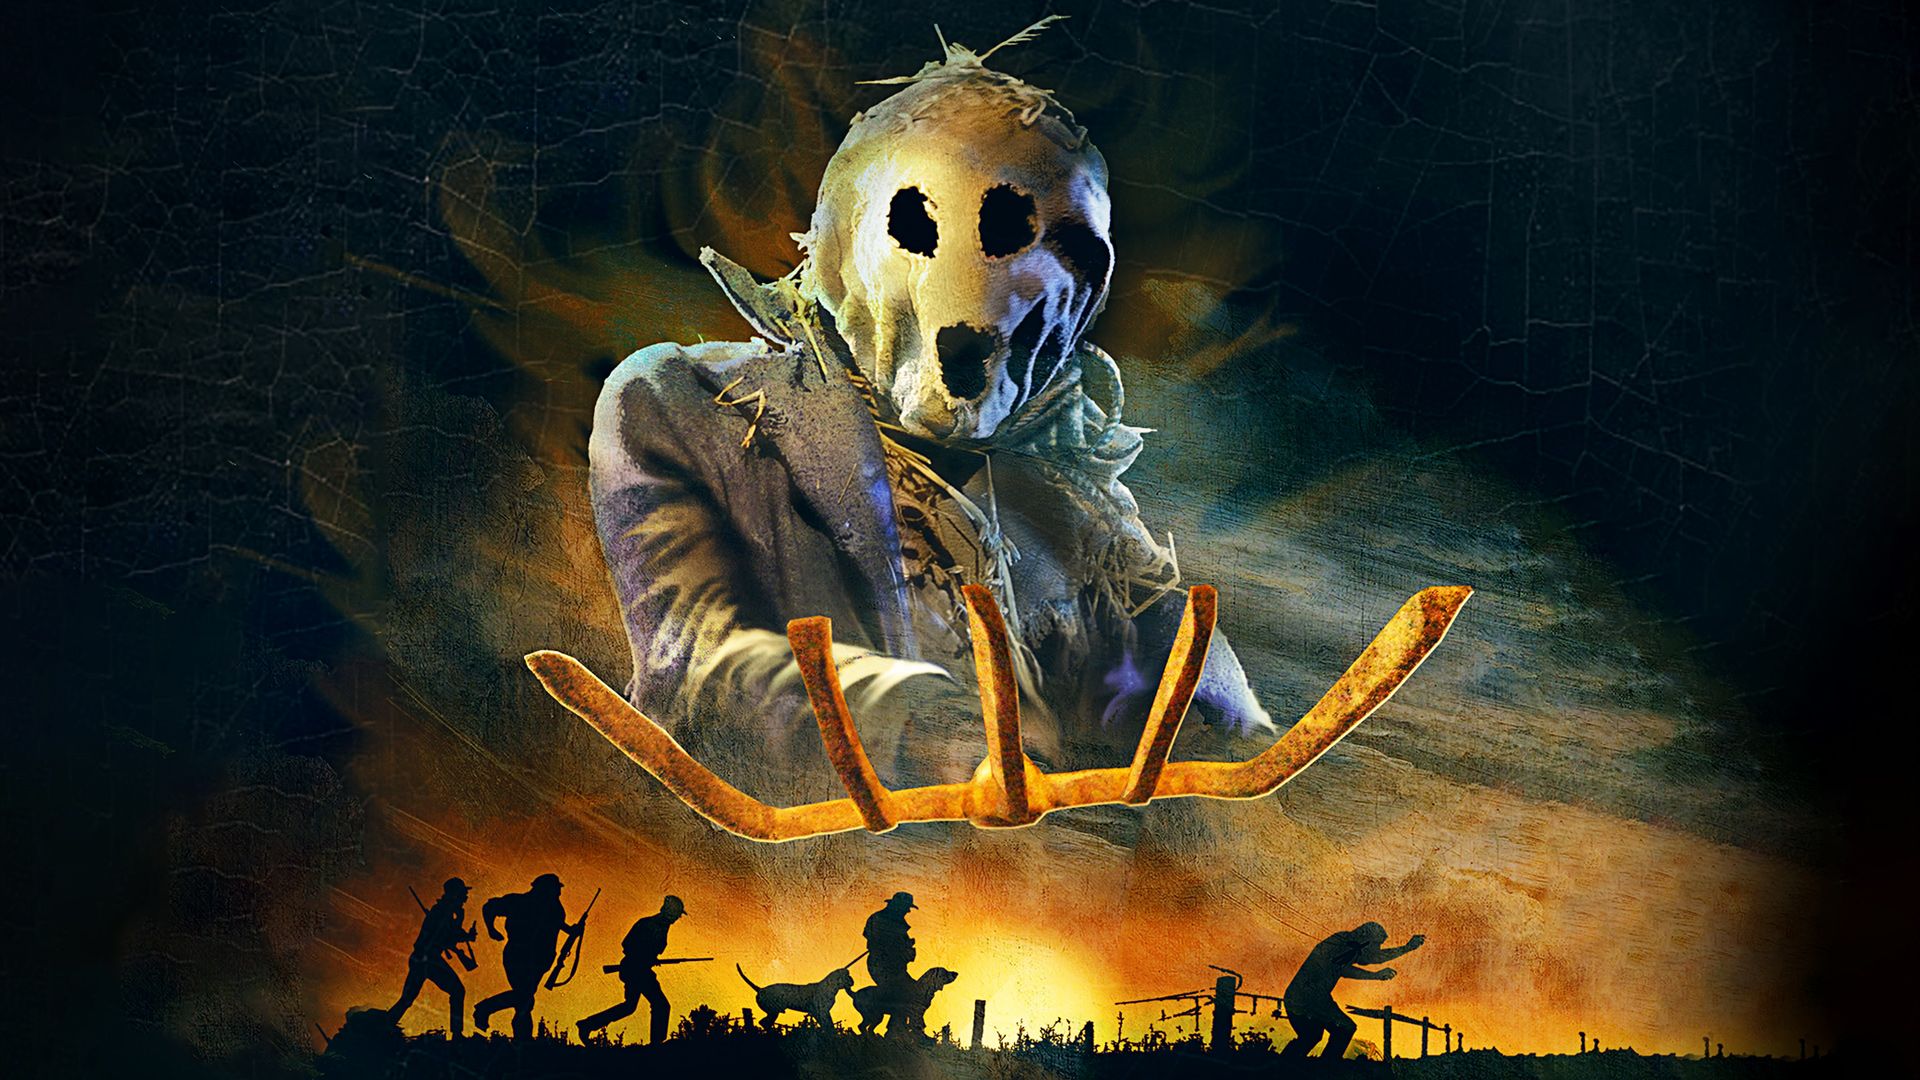 Dark Night of the Scarecrow background